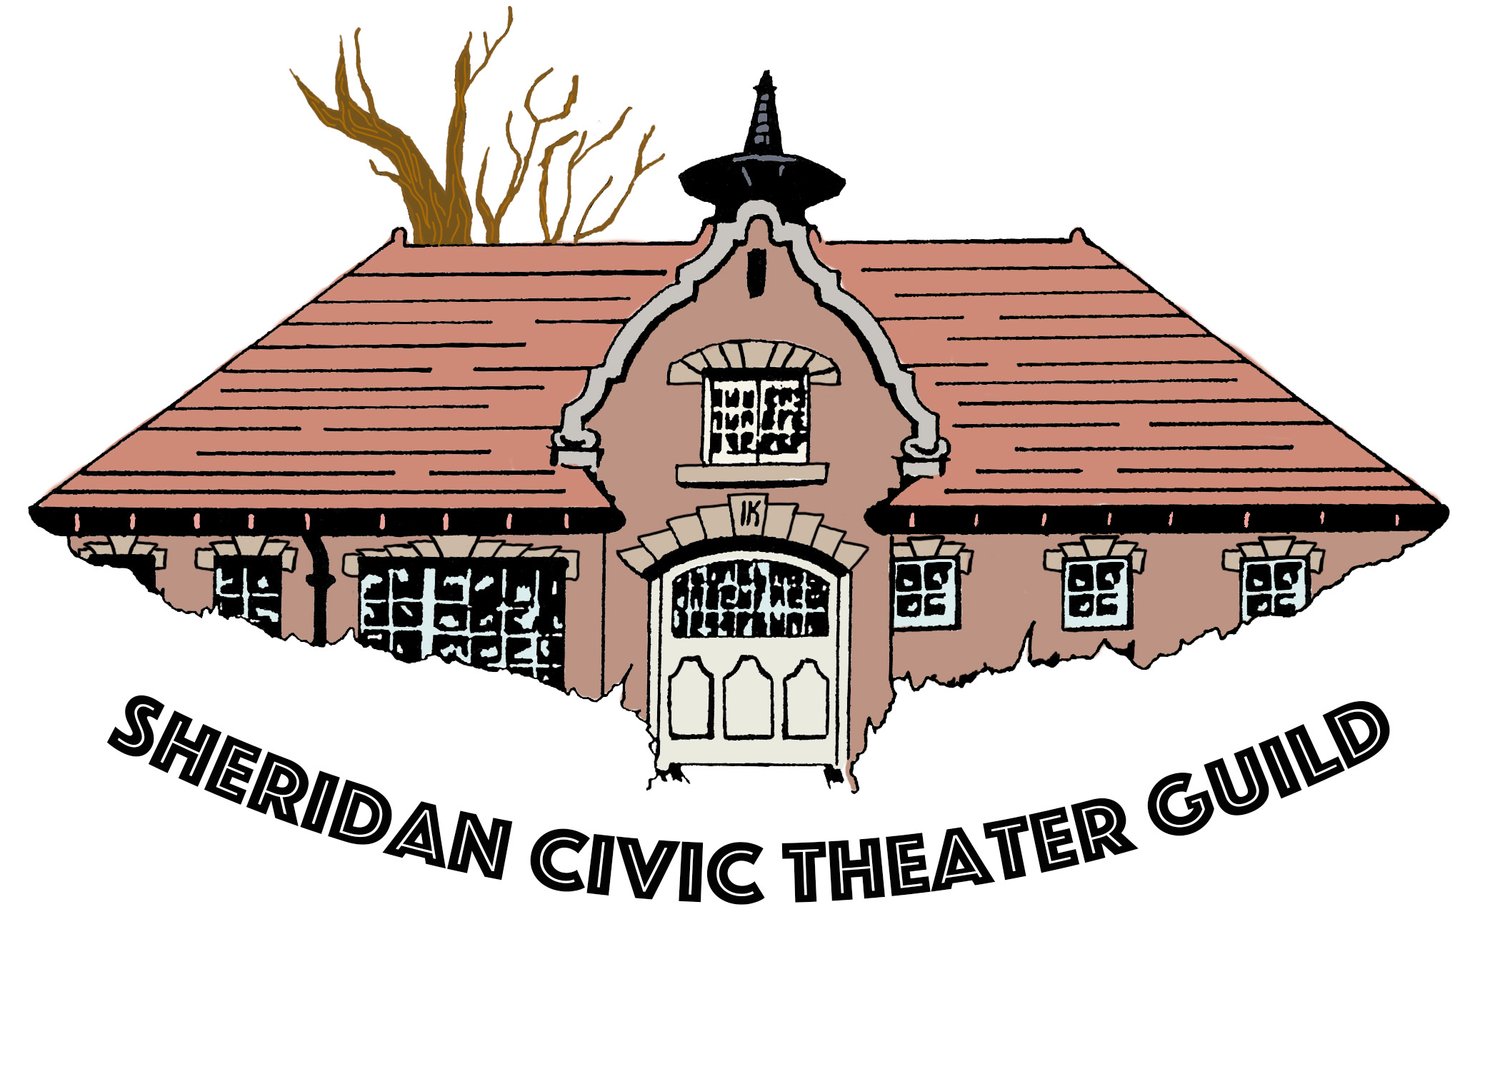 Sheridan Civic Theater Guild